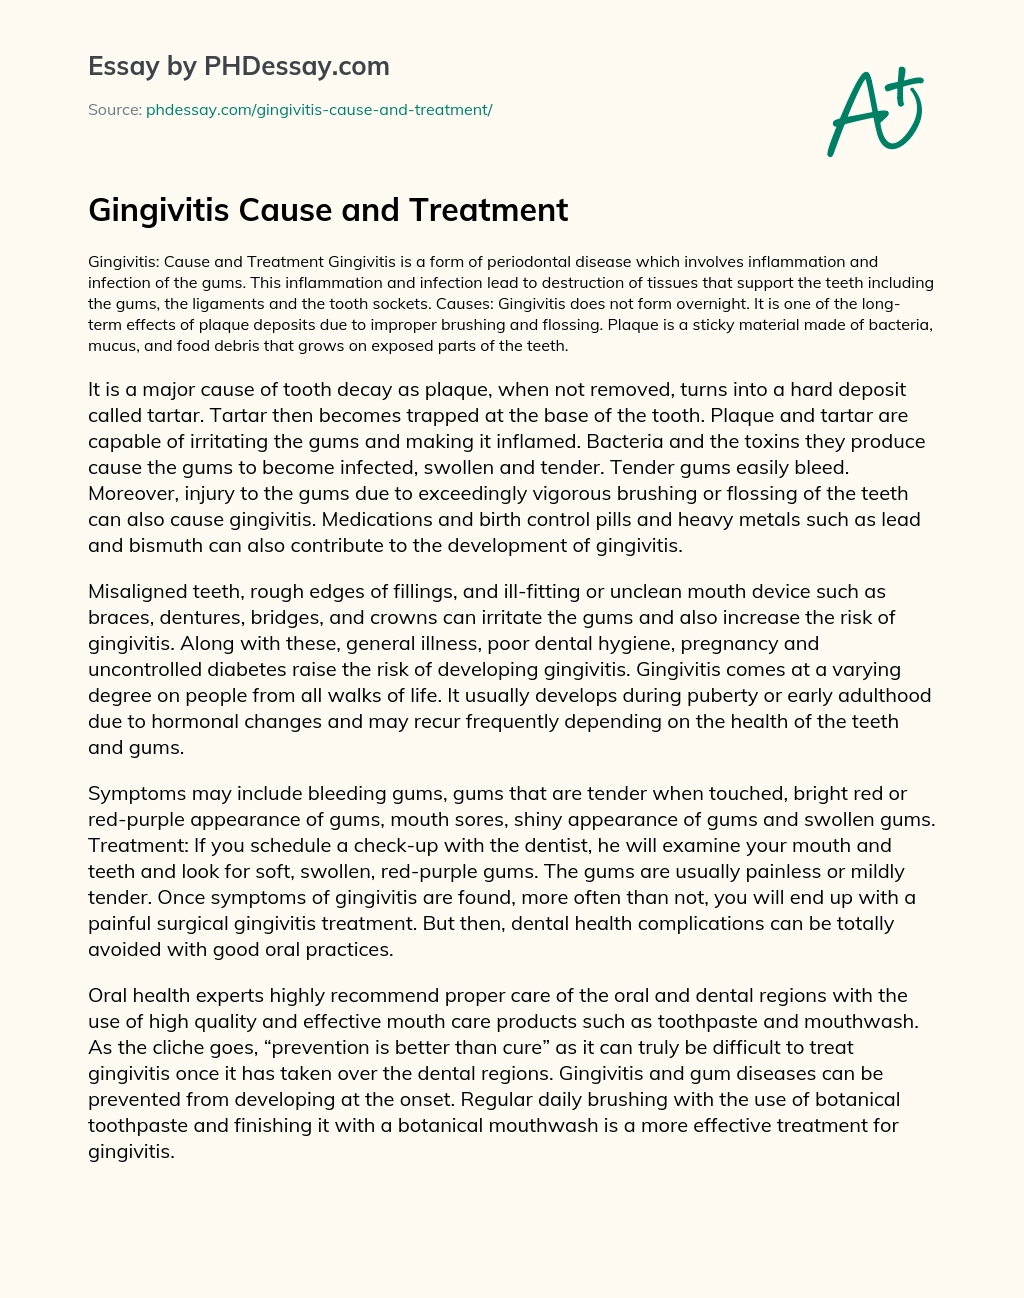 Gingivitis Cause and Treatment essay